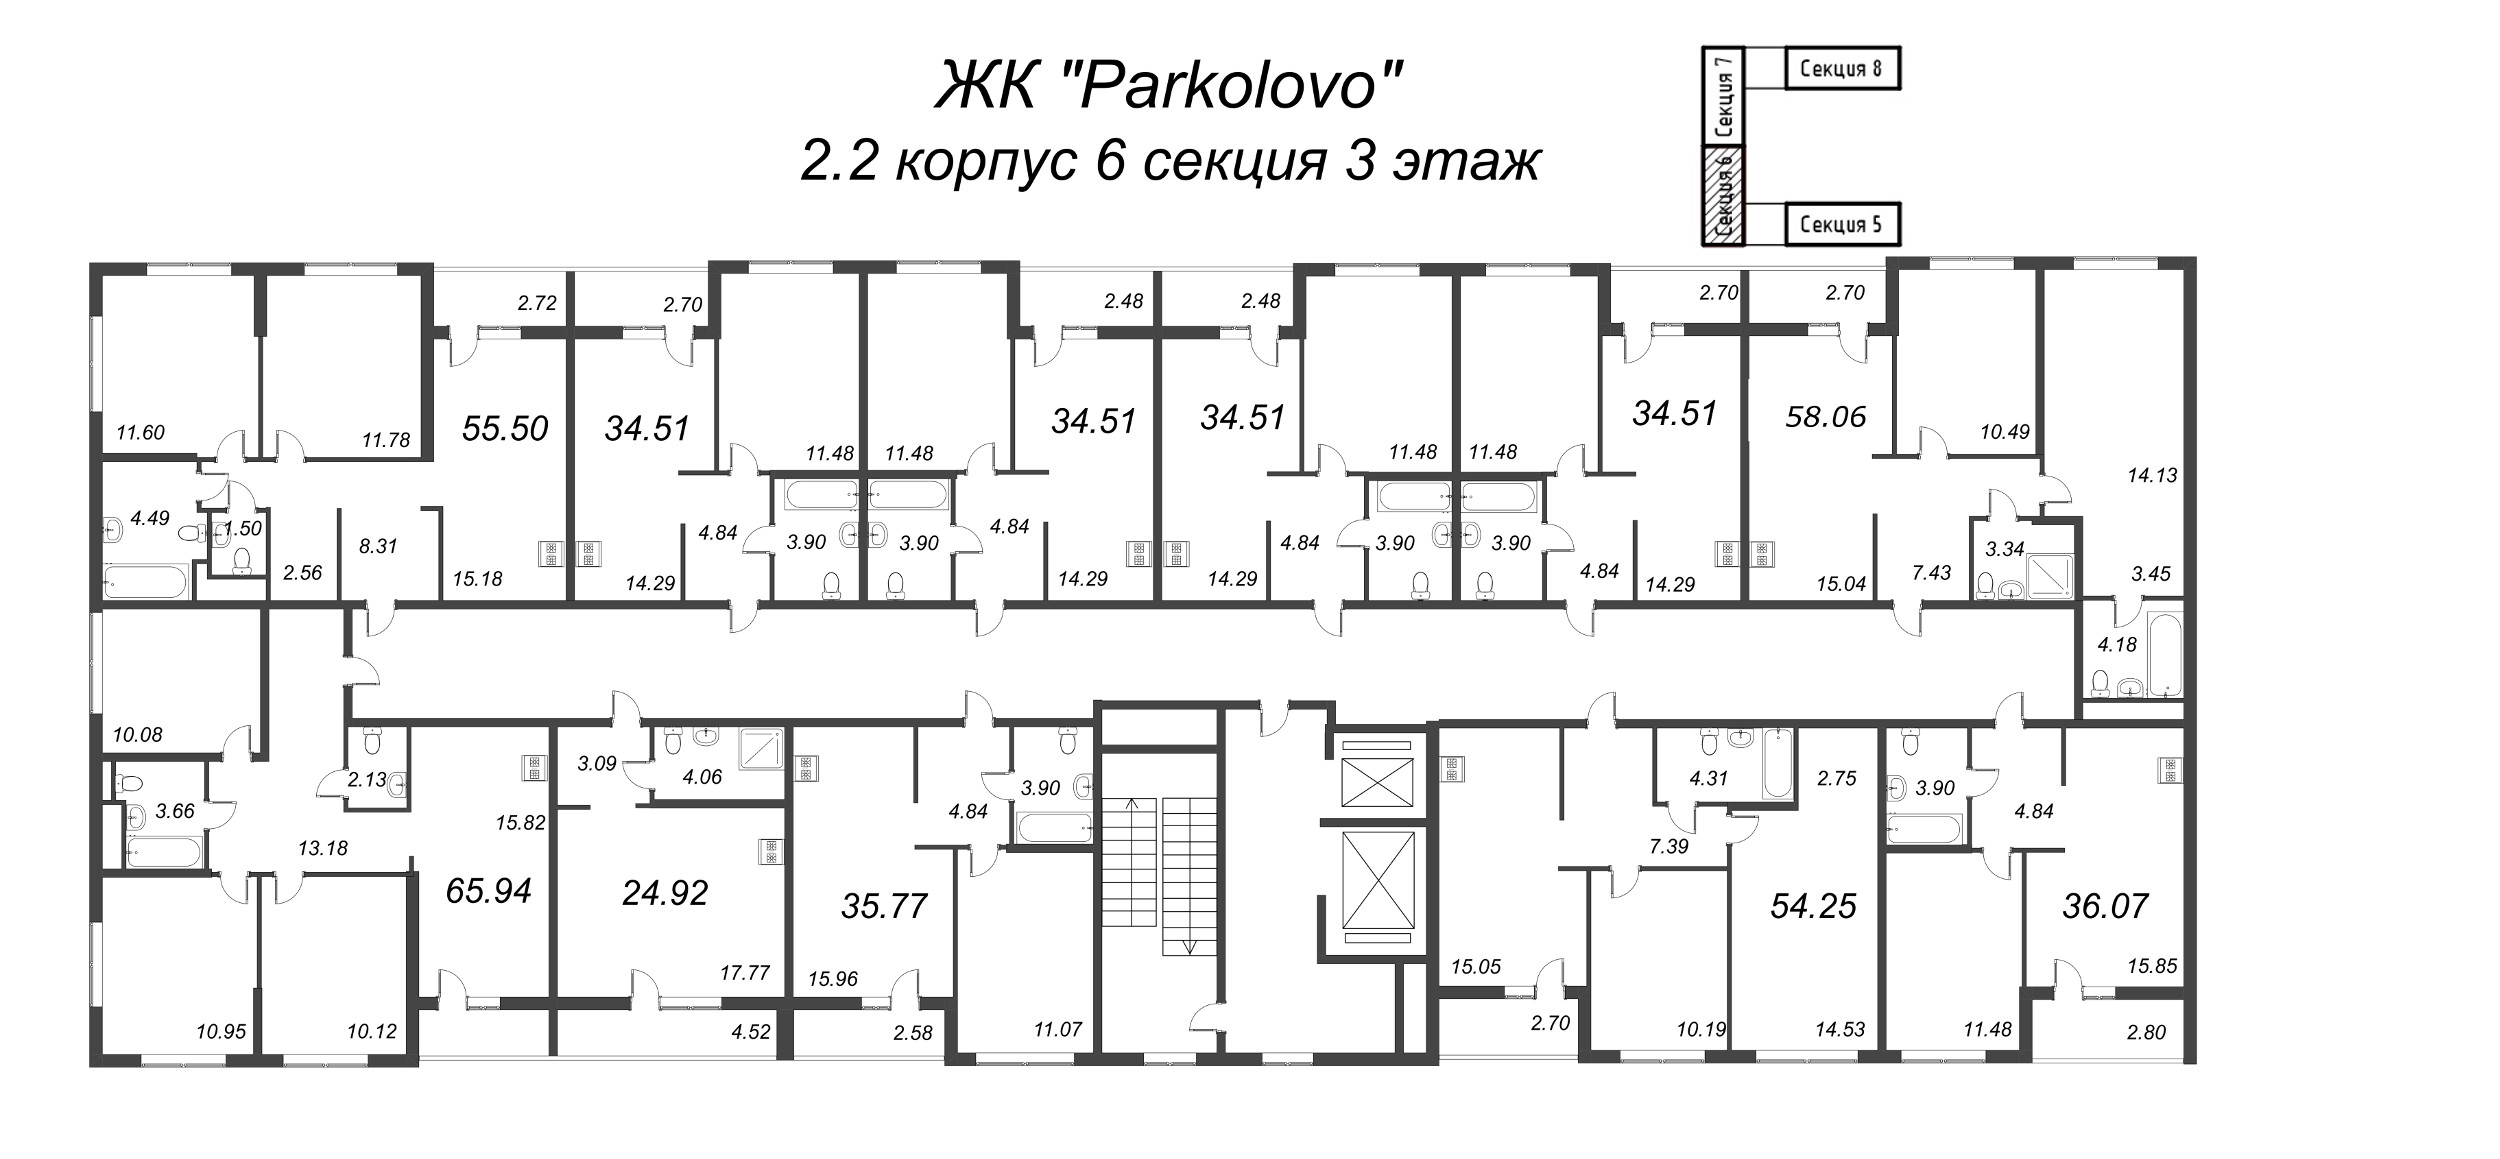 3-комнатная (Евро) квартира, 58.06 м² - планировка этажа